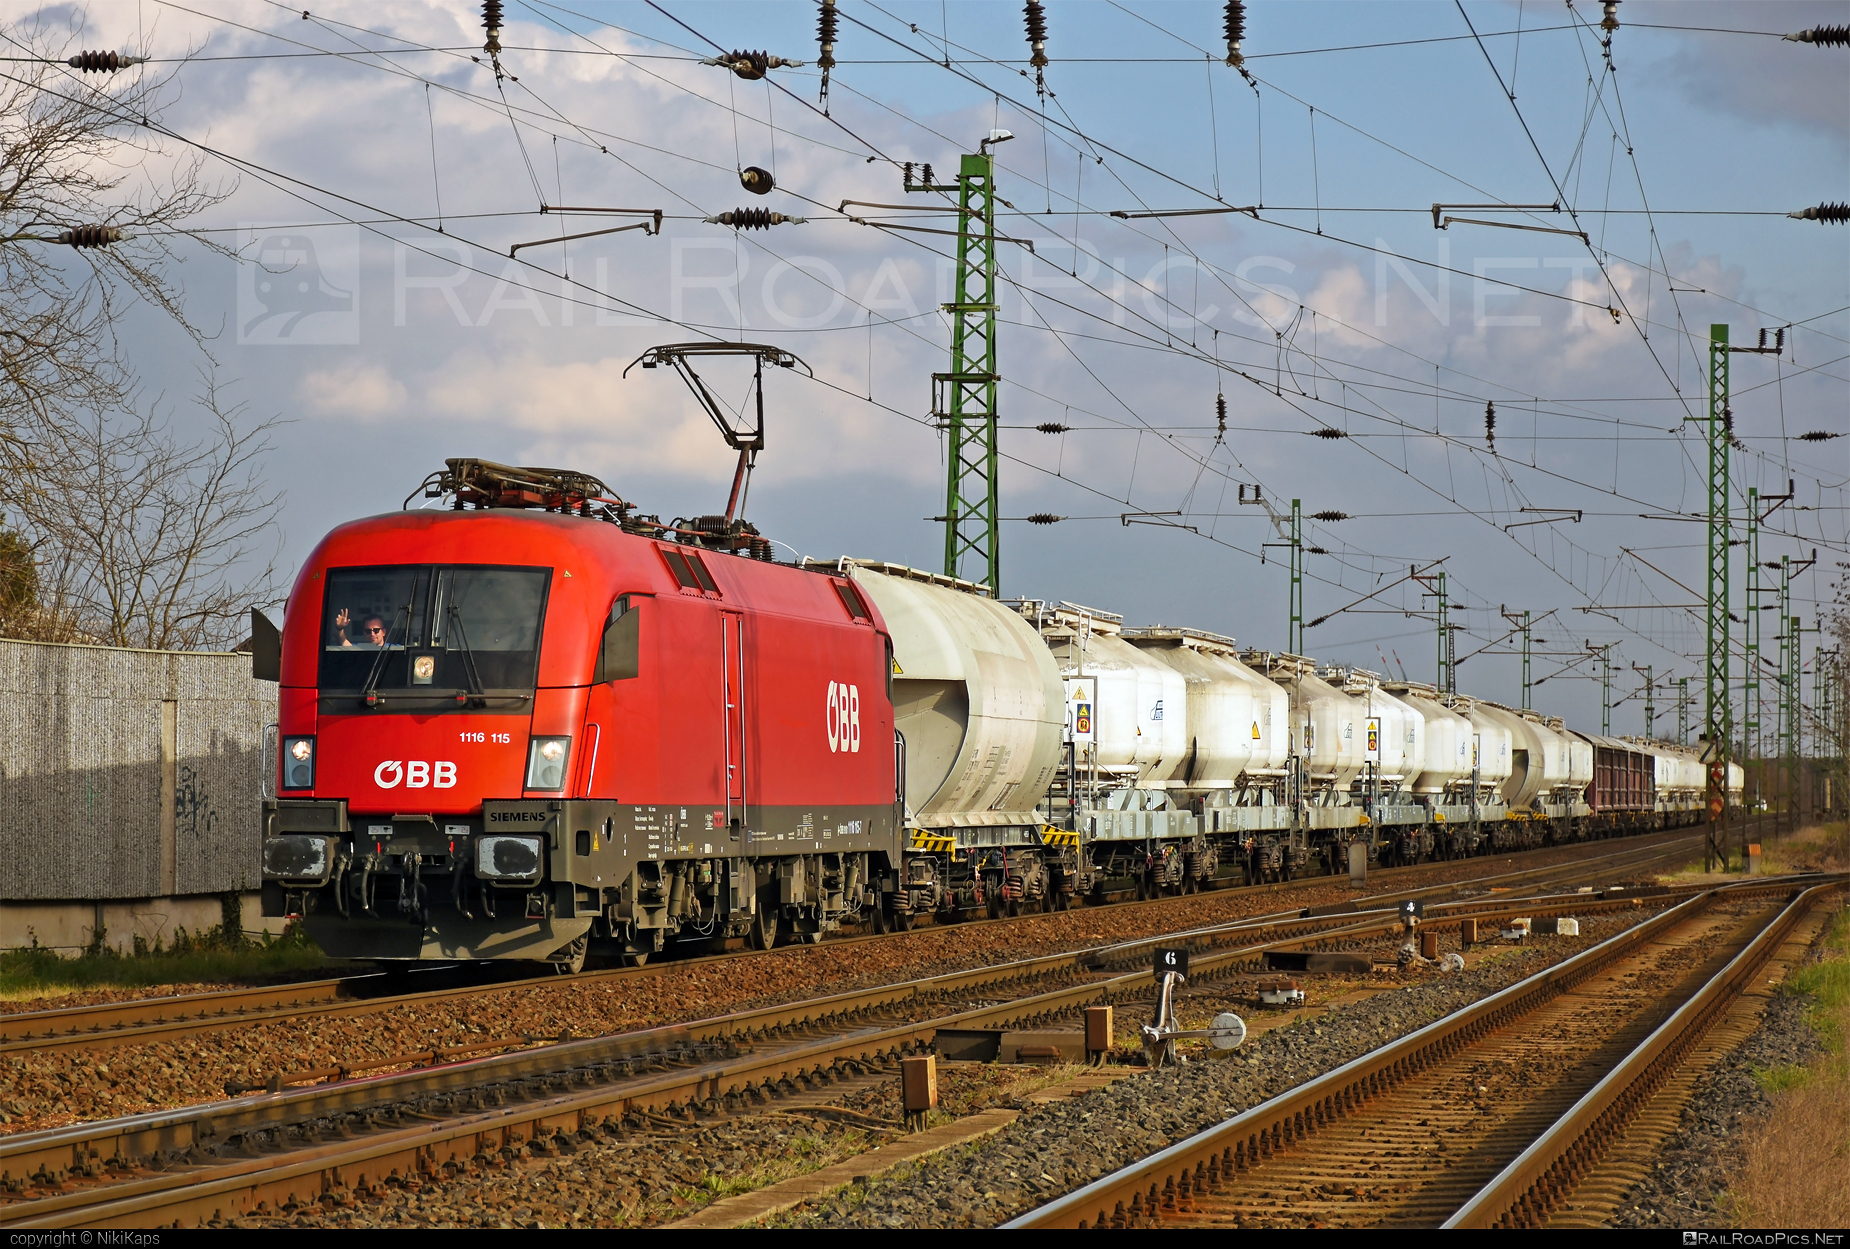 Siemens ES 64 U2 - 1116 115 operated by Rail Cargo Austria AG #es64 #es64u2 #eurosprinter #greetings #obb #osterreichischebundesbahnen #rcw #siemens #siemensEs64 #siemensEs64u2 #siemenstaurus #taurus #tauruslocomotive